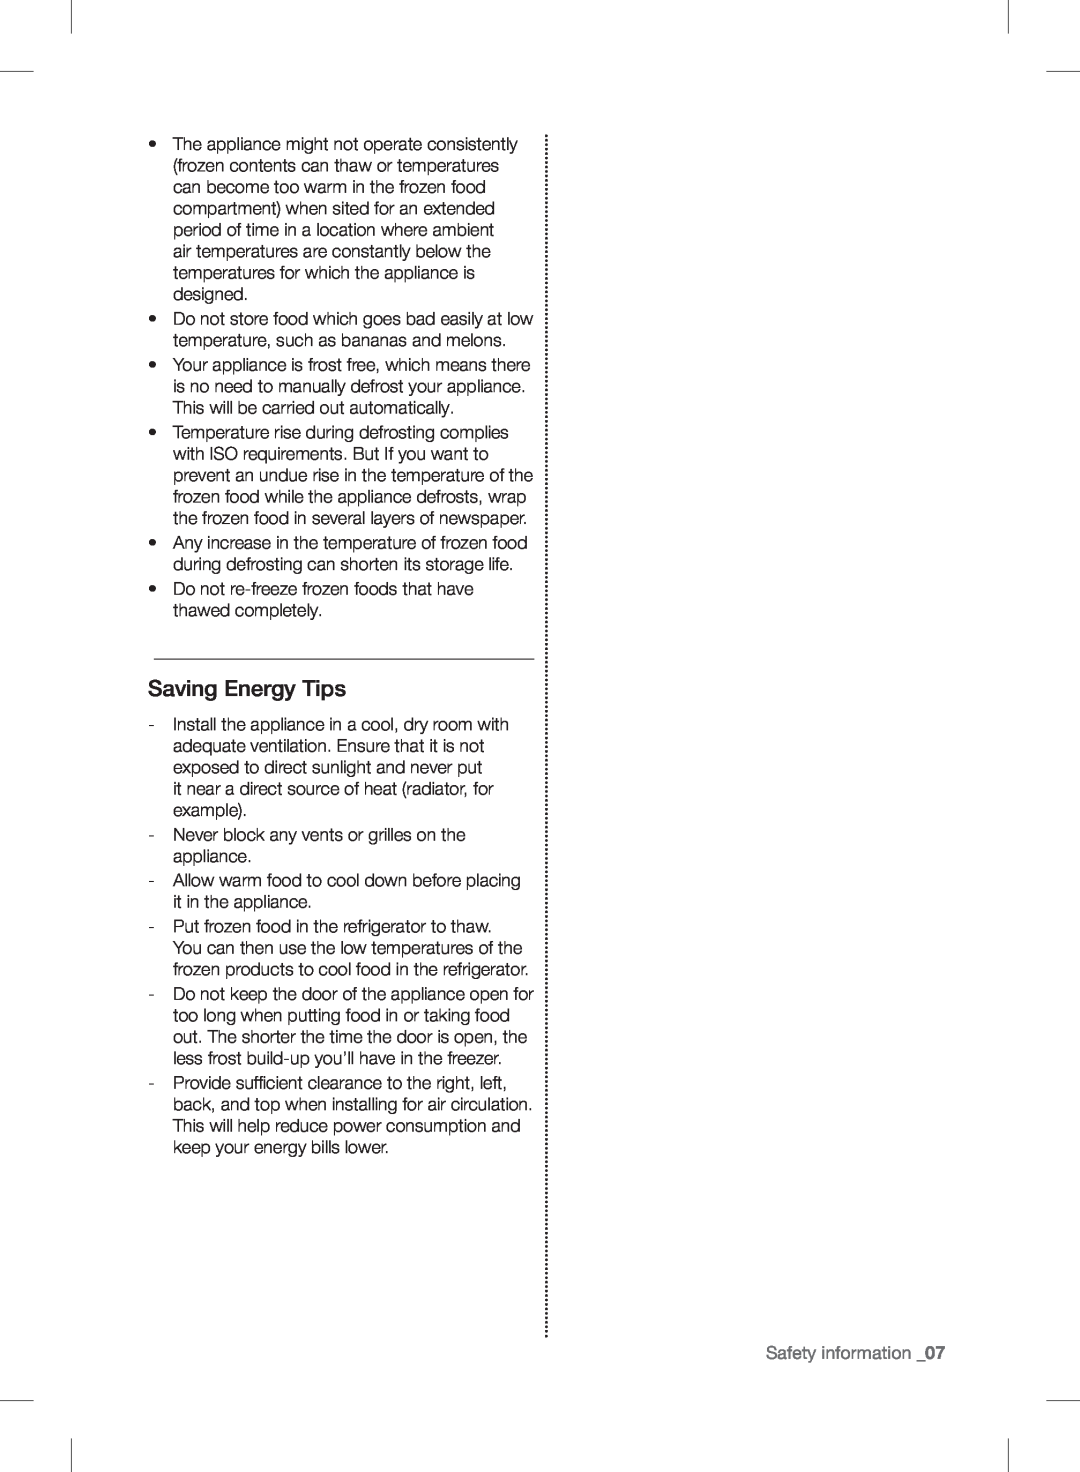 Samsung RF24FSEDBSR user manual Saving Energy Tips, Safety information _07 